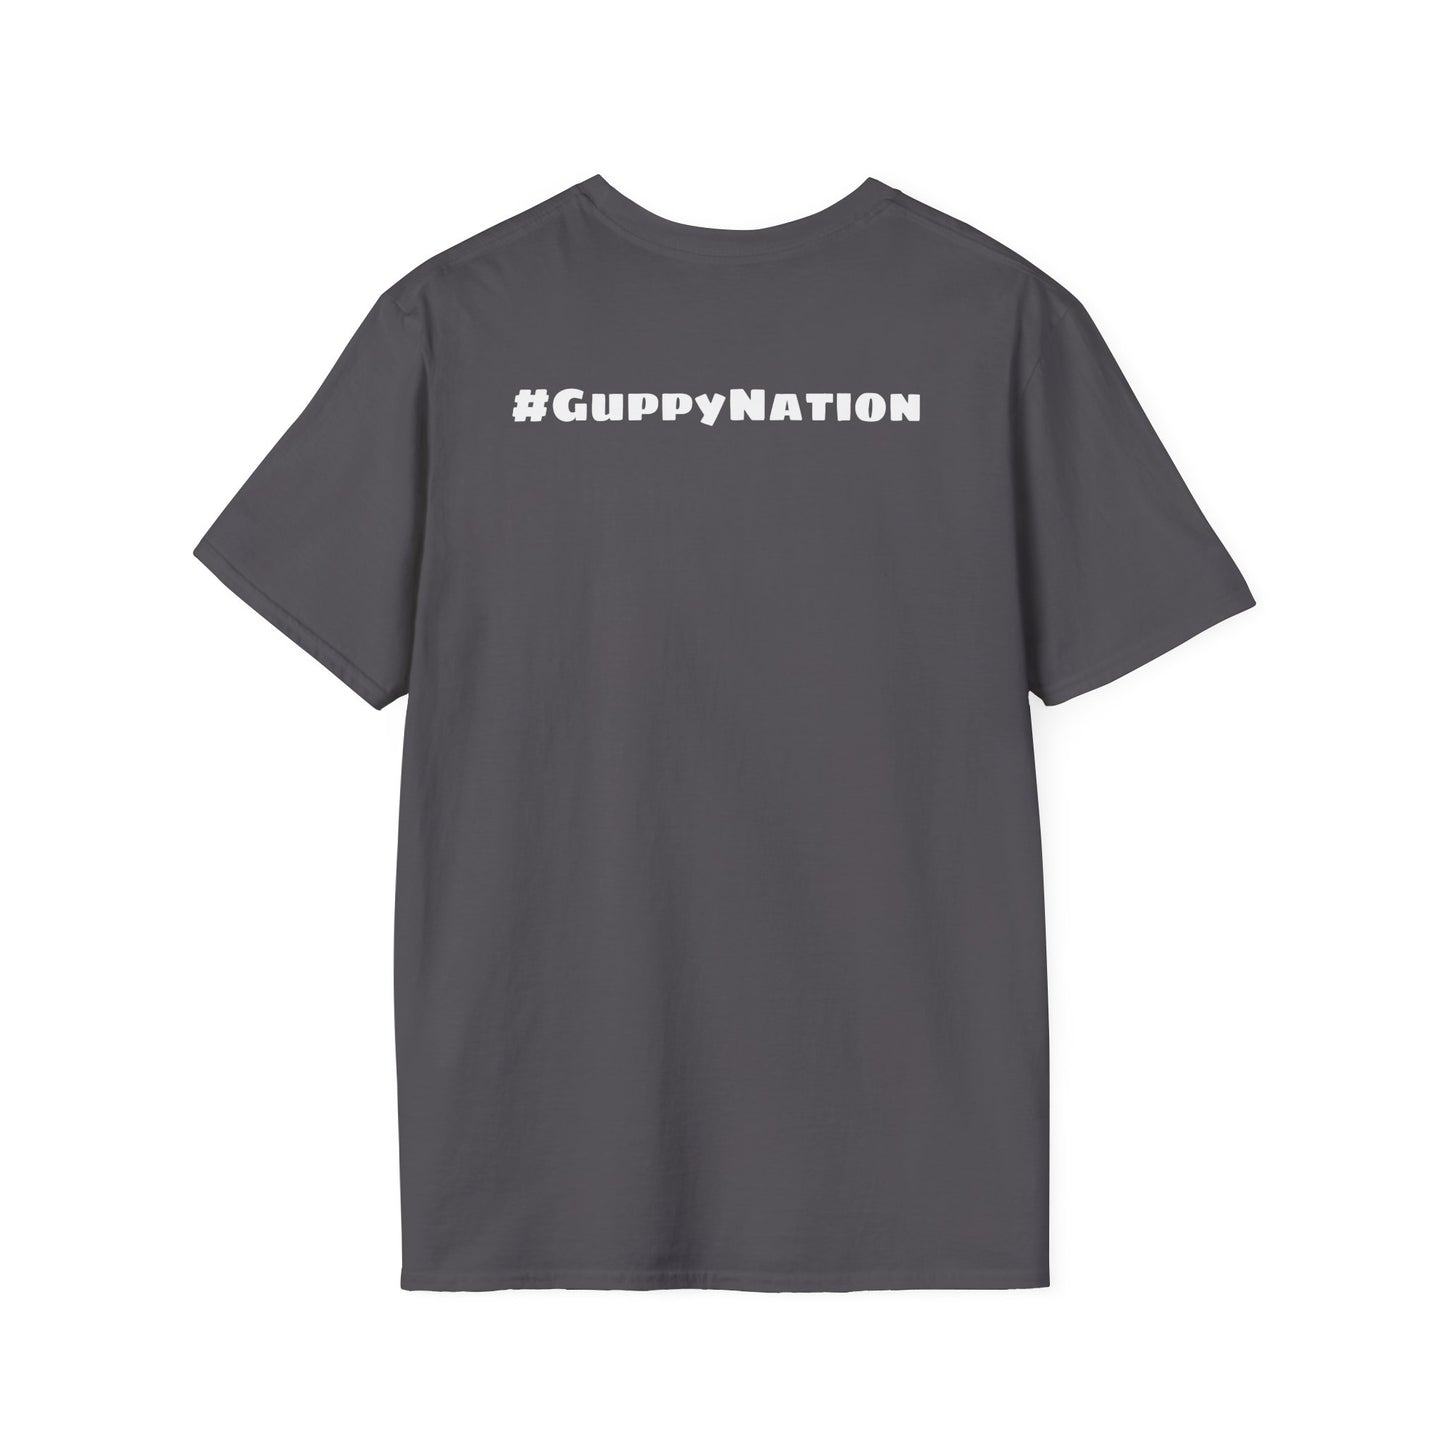 Michael's Fish Room #GuppyNation - Unisex Softstyle T-Shirt